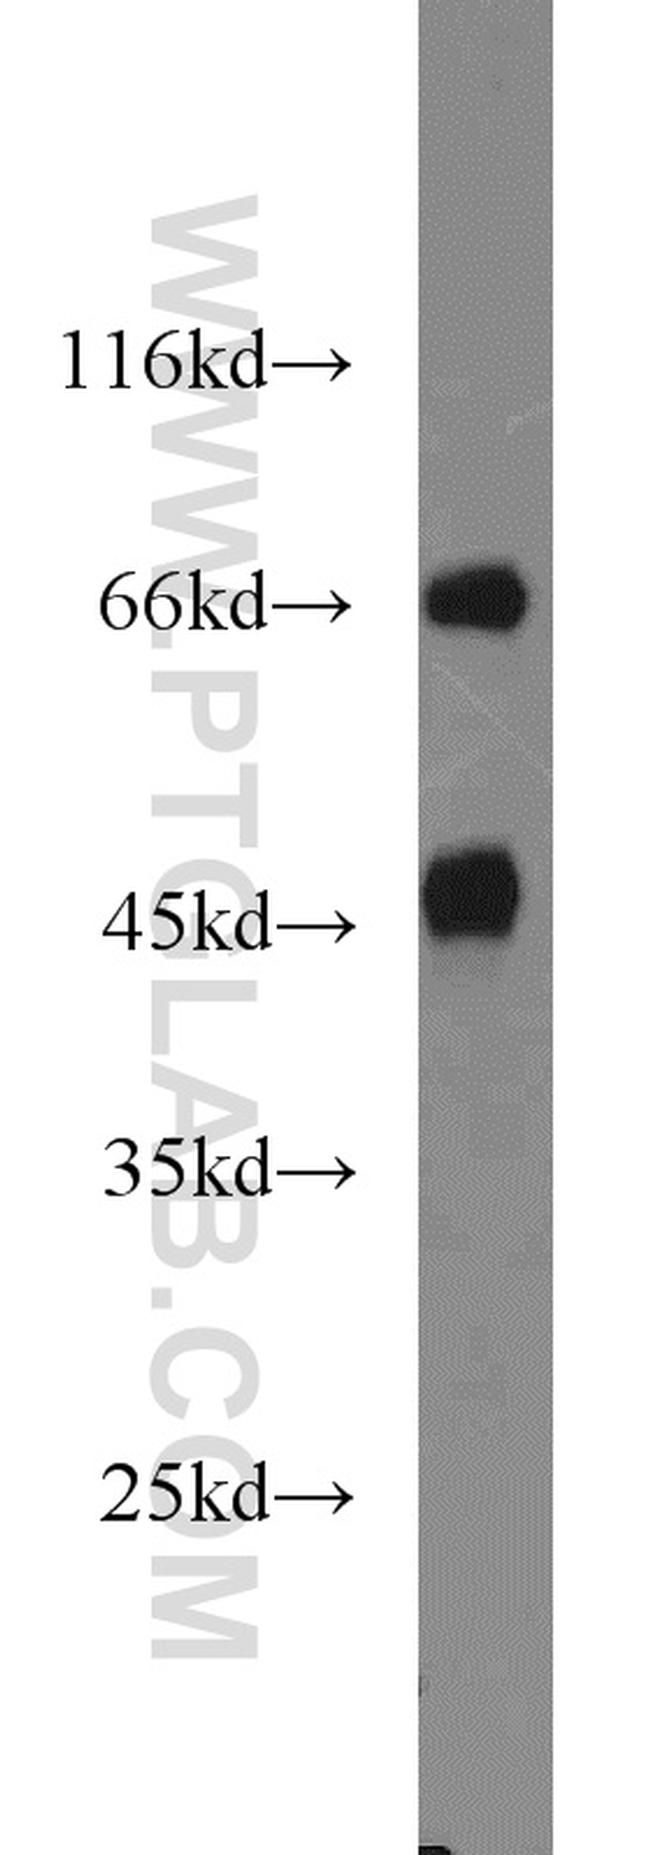 DARS2 Antibody in Western Blot (WB)